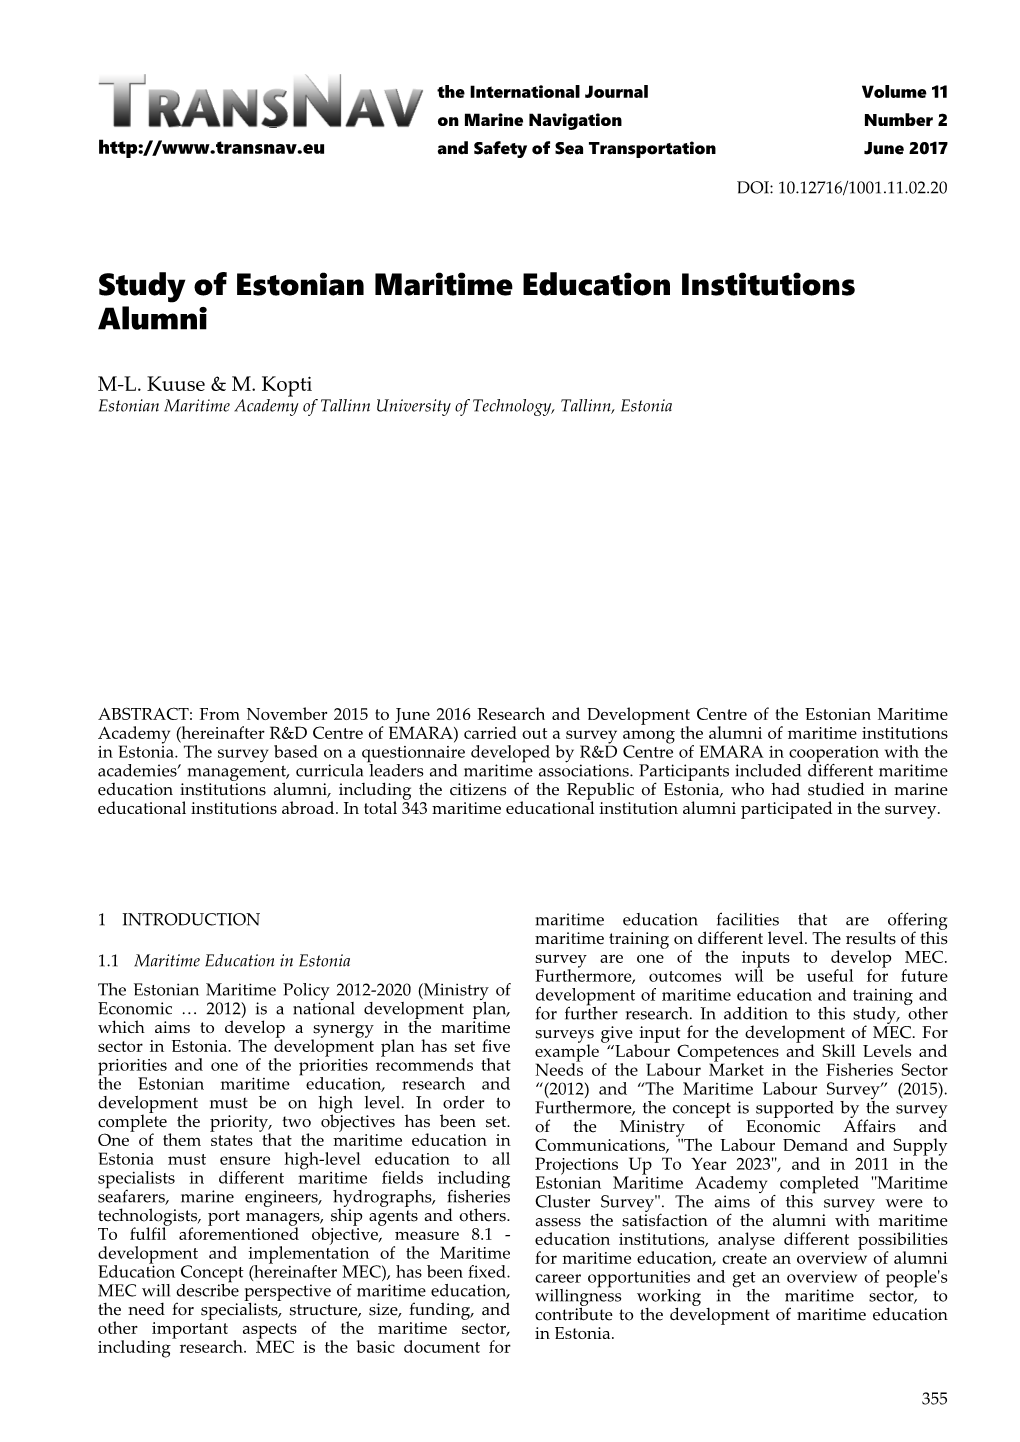 Study of Estonian Maritime Education Institutions Alumni